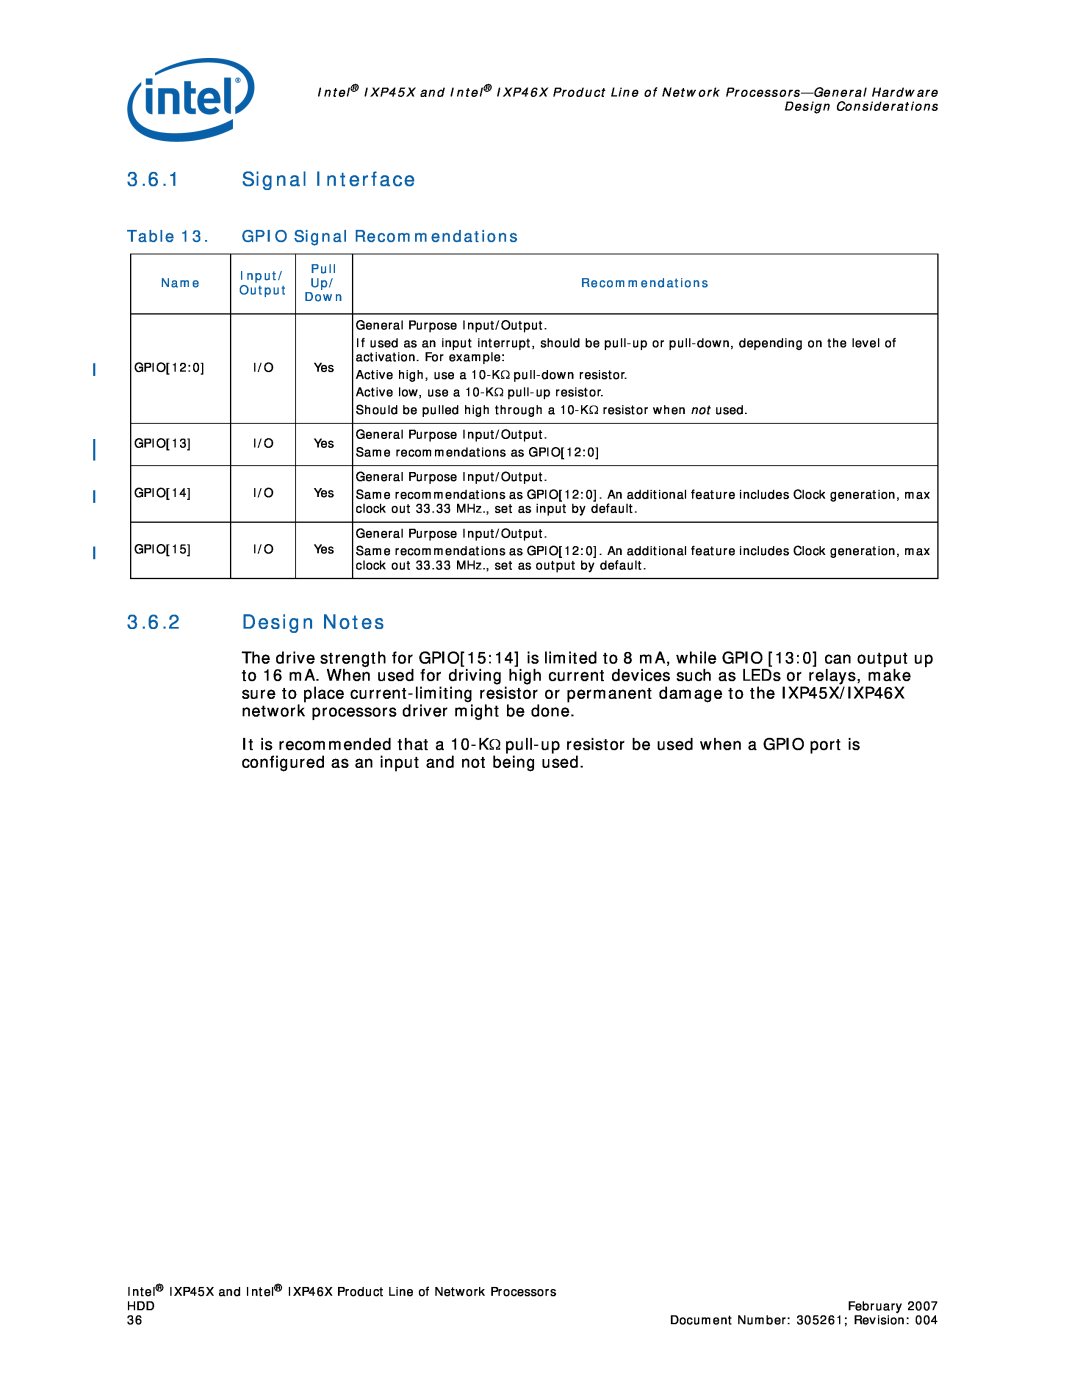 Intel IXP46X, IXP45X manual 3.6.1Signal Interface, 3.6.2Design Notes, GPIO Signal Recommendations 